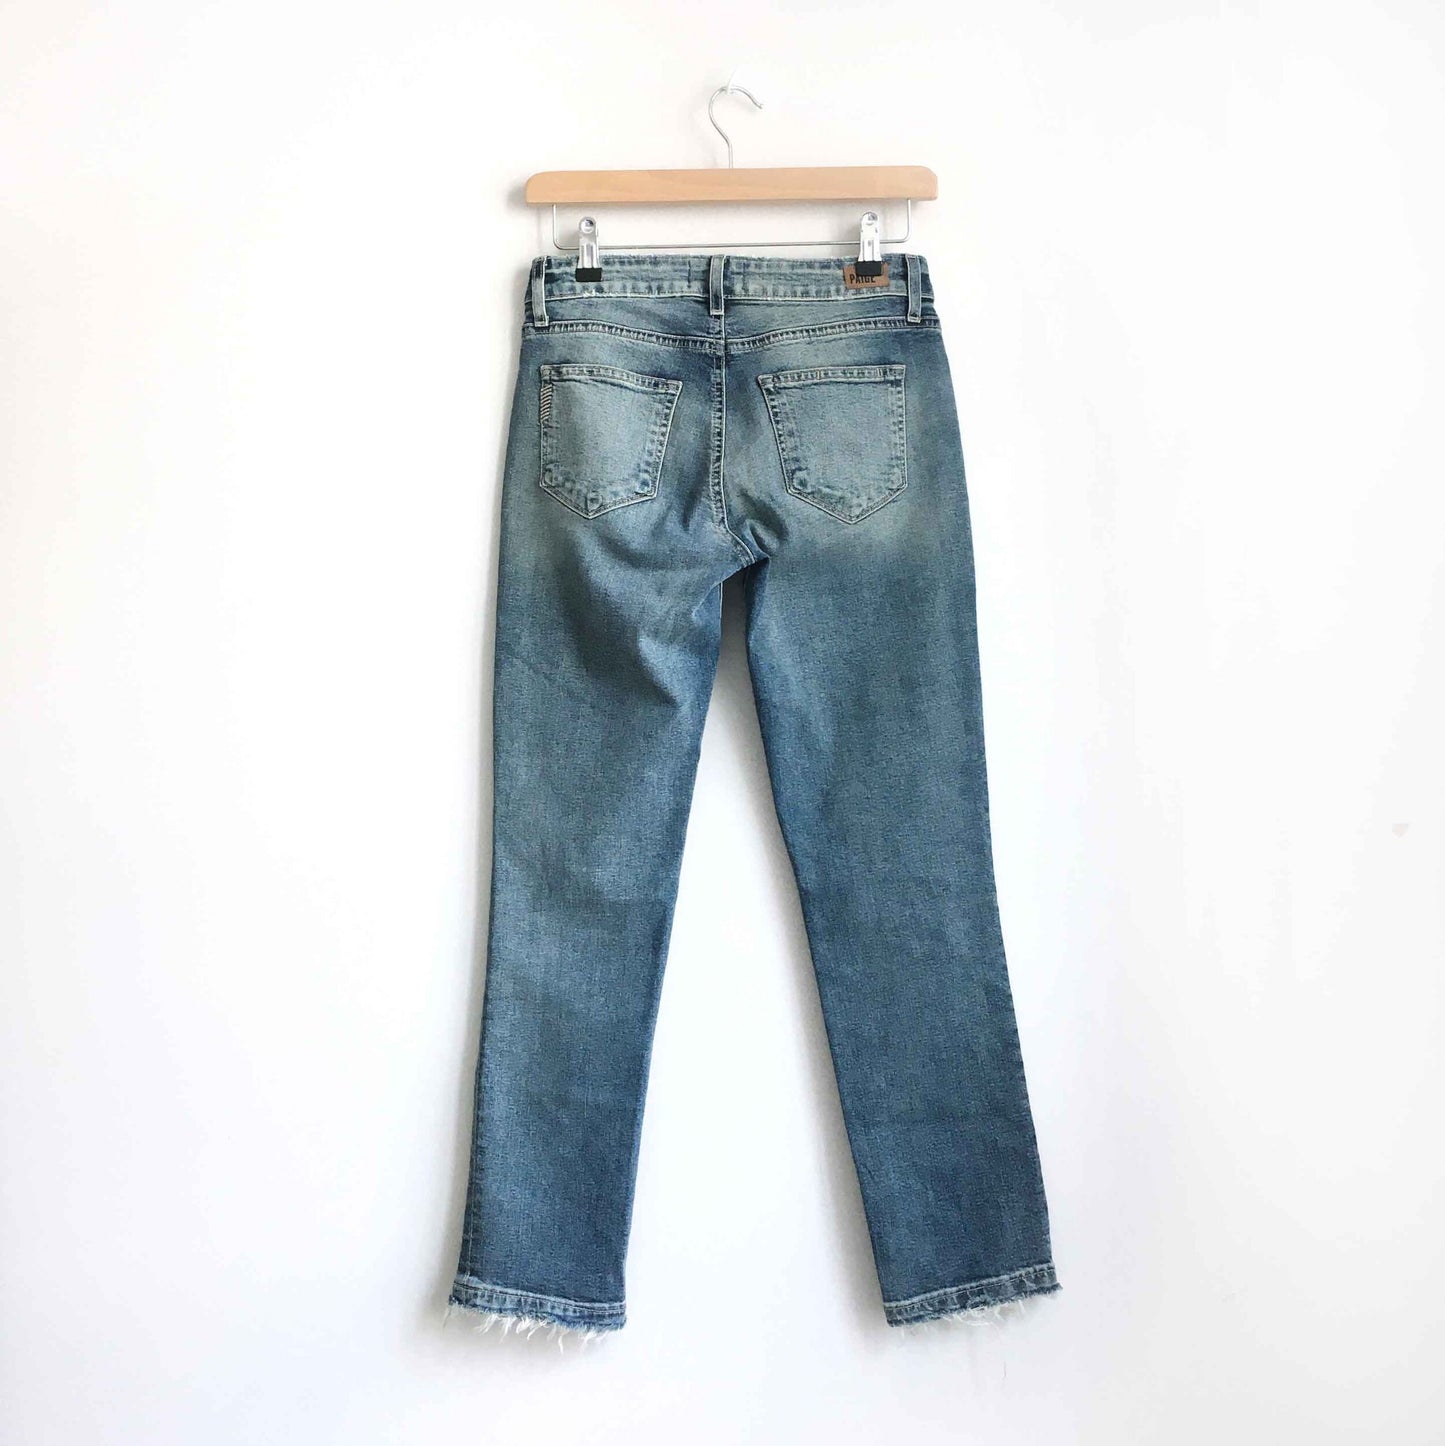 paige brigitte oceania straight crop jeans - size 23